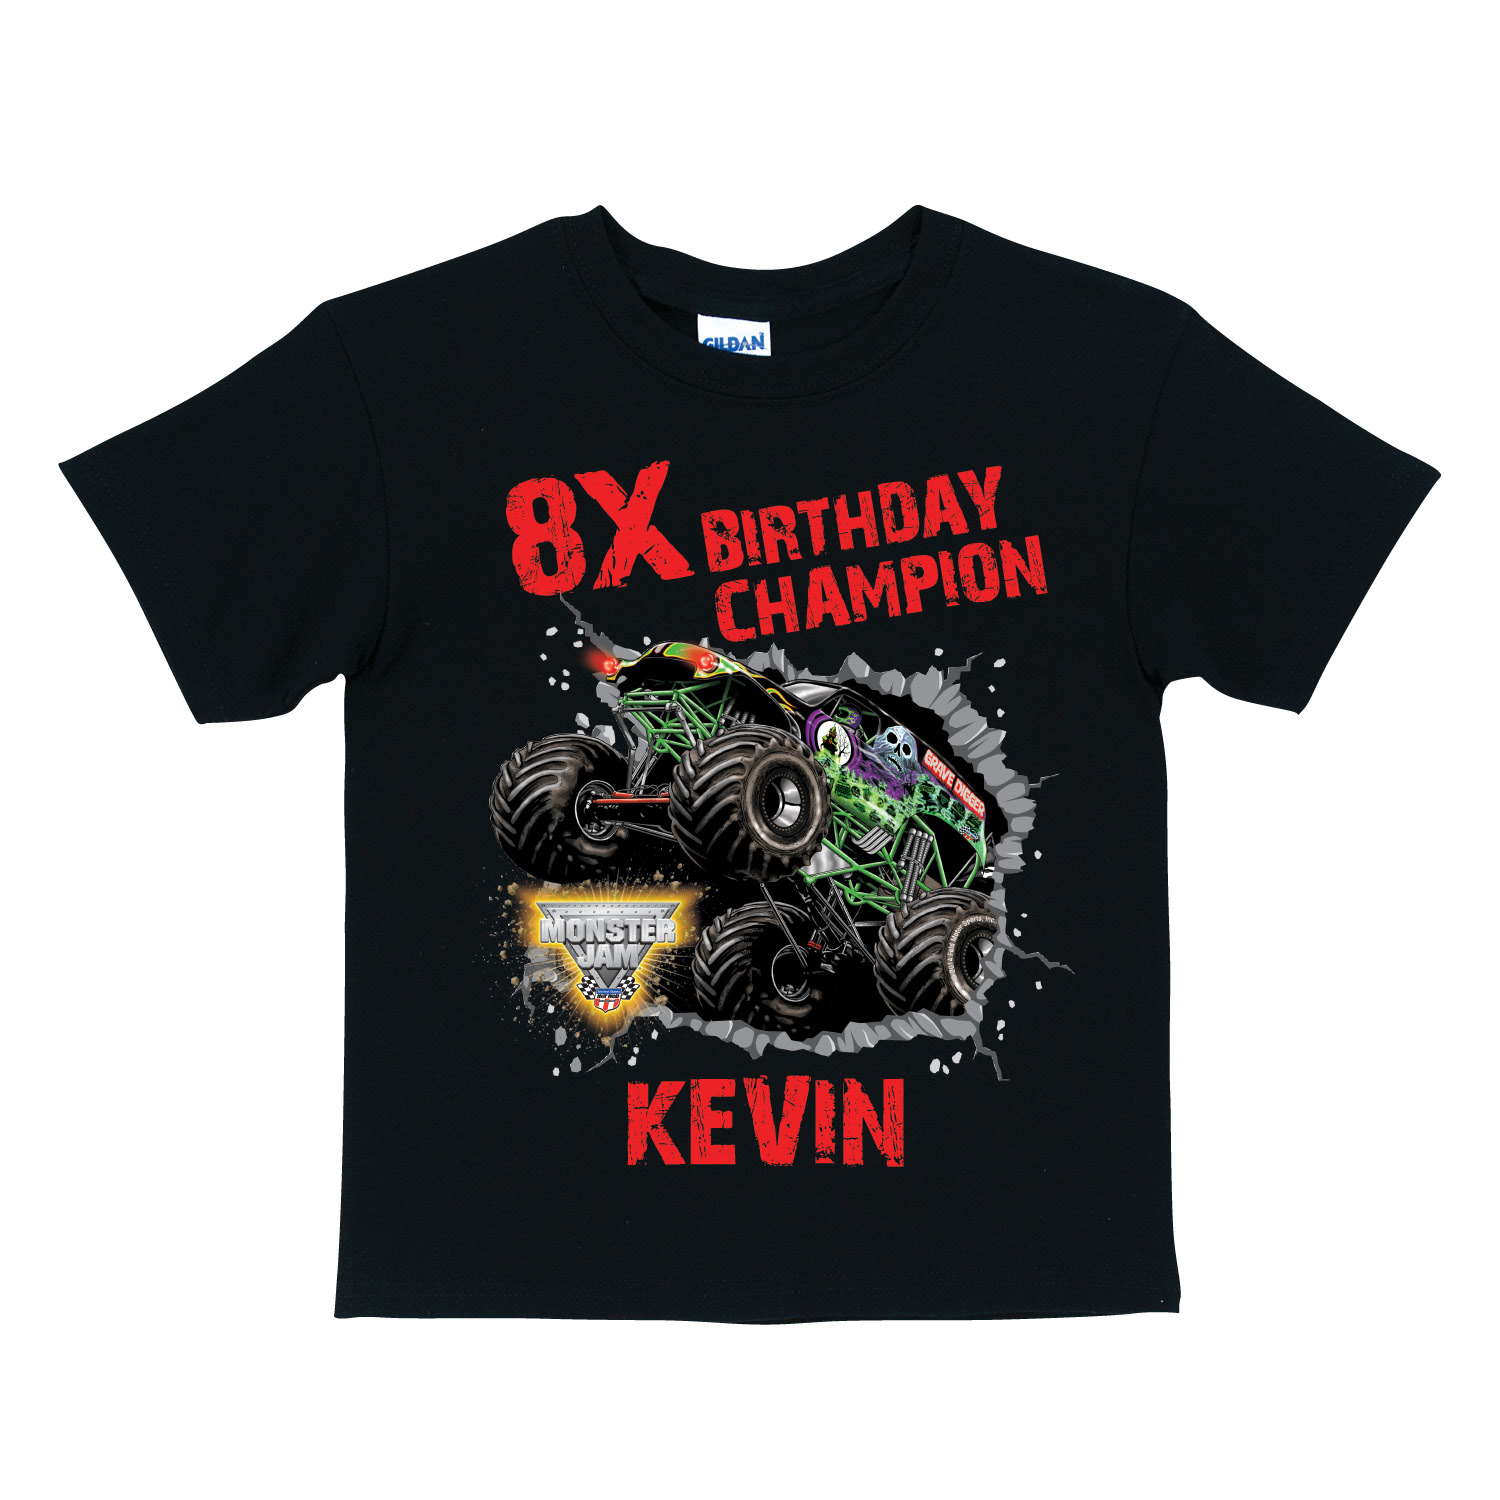 Monster Jam Birthday Champion Black T-shirt